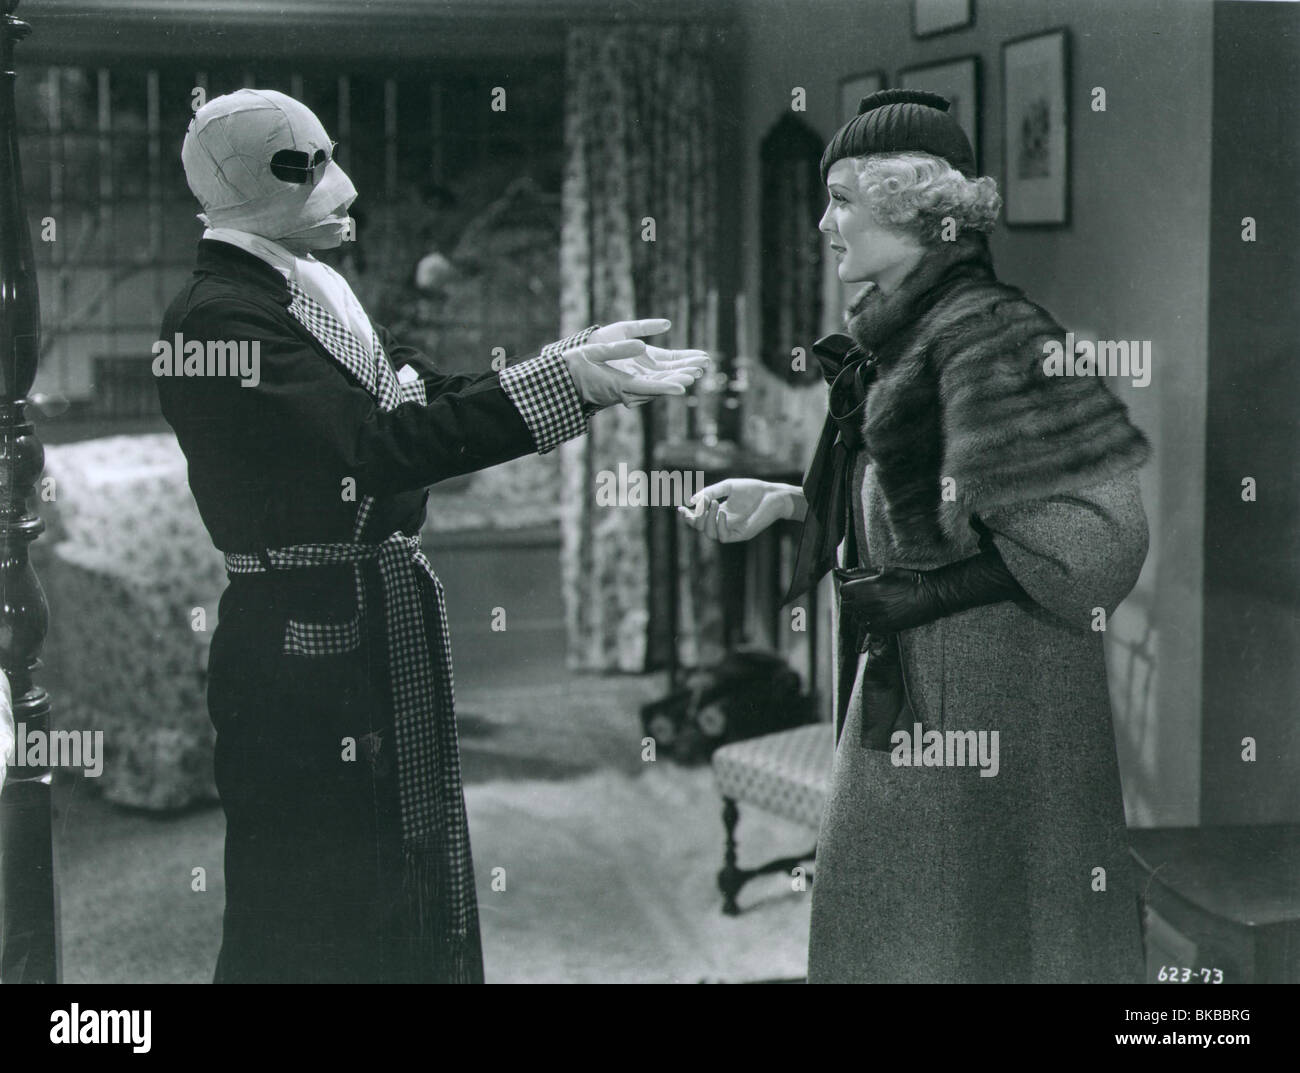 THE INVISIBLE MAN (1933) CLAUDE RAINS, GLORIA STUART INVM 002P Stock Photo